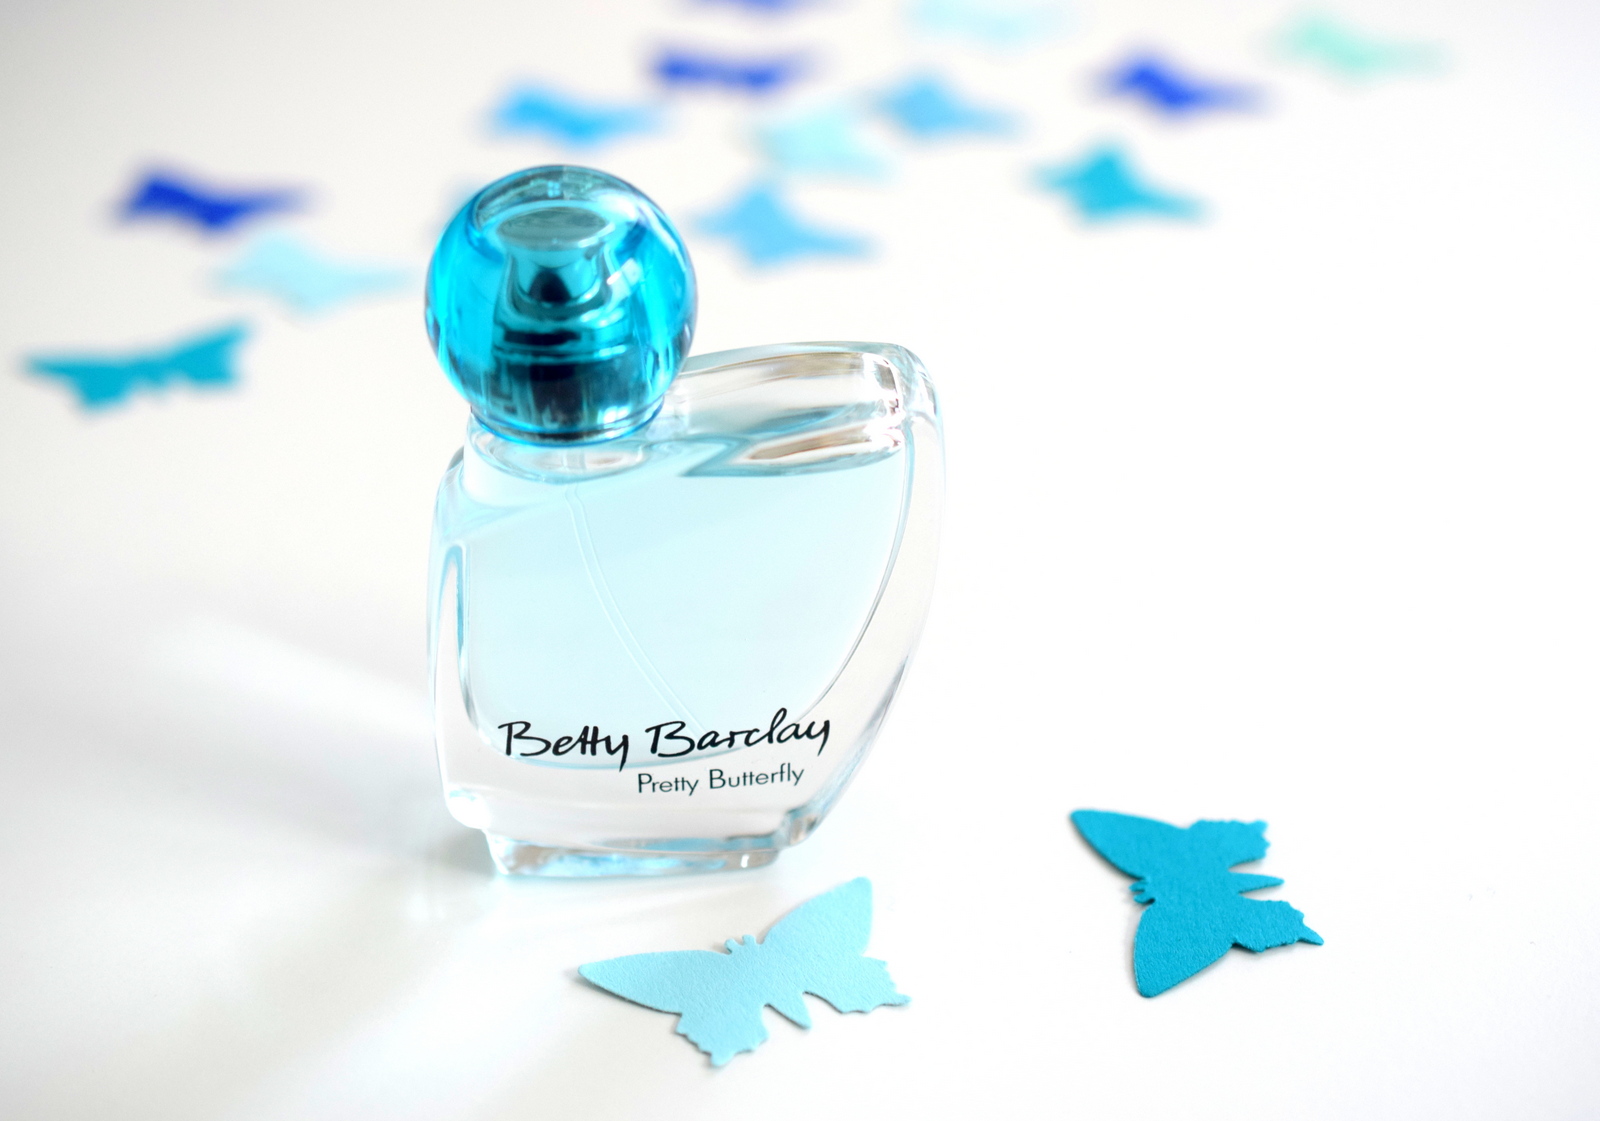 Betty Barclay Pretty Butterfly EdT Erfahrung und Parfumbeschreibung